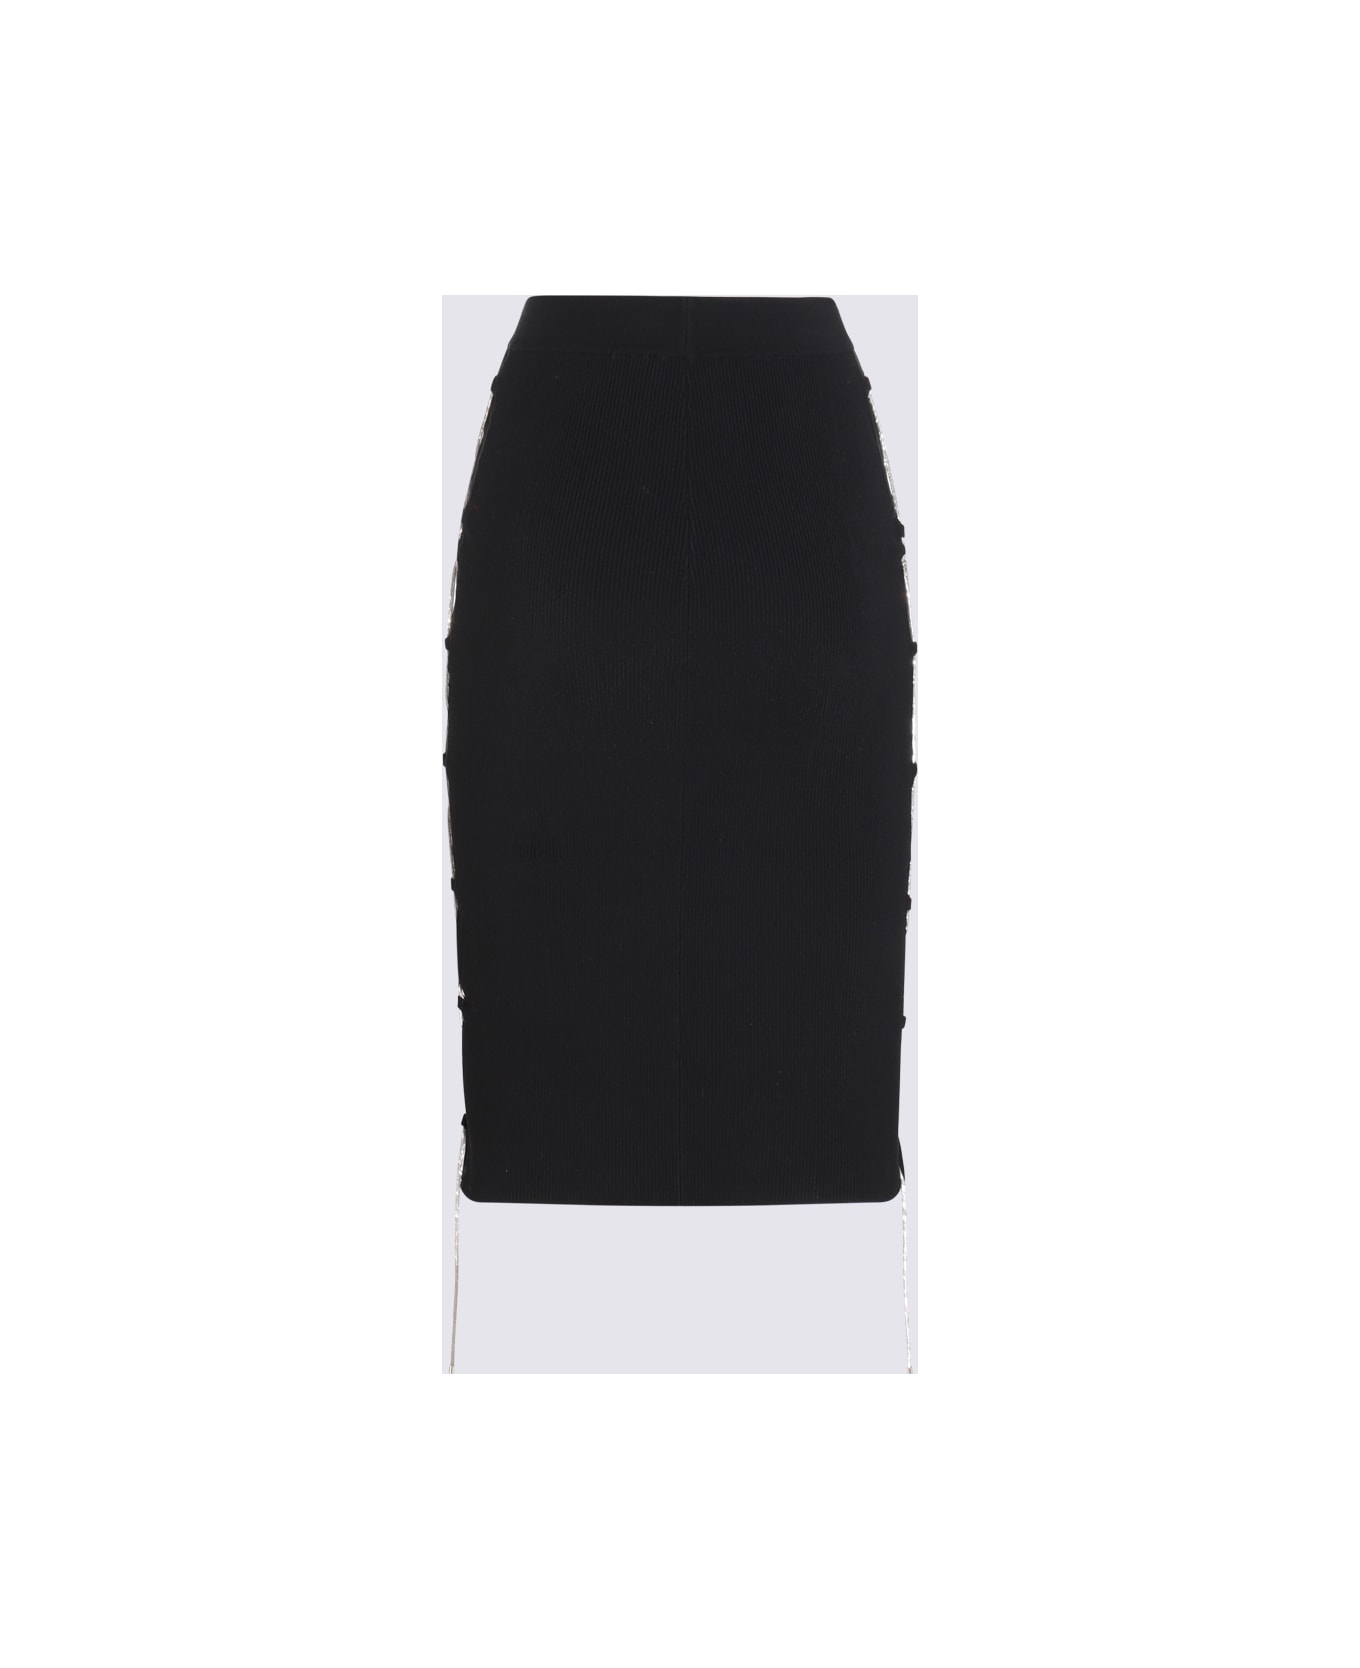 Giuseppe di Morabito Black Cotton Blend Skirt - Black